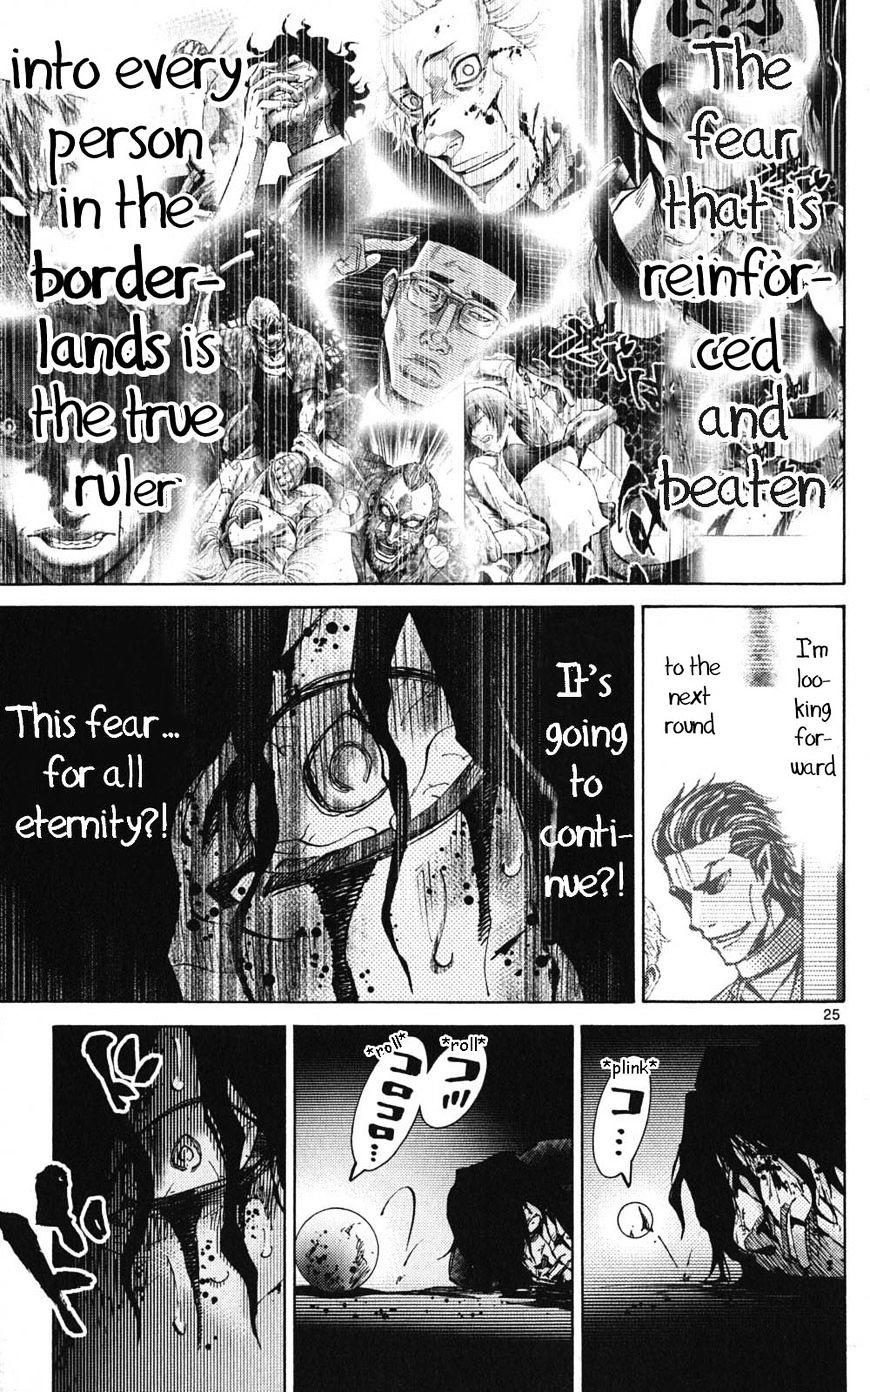 Imawa No Kuni No Alice Chapter 49 : Jack Of Hearts (5) page 25 - Mangakakalot